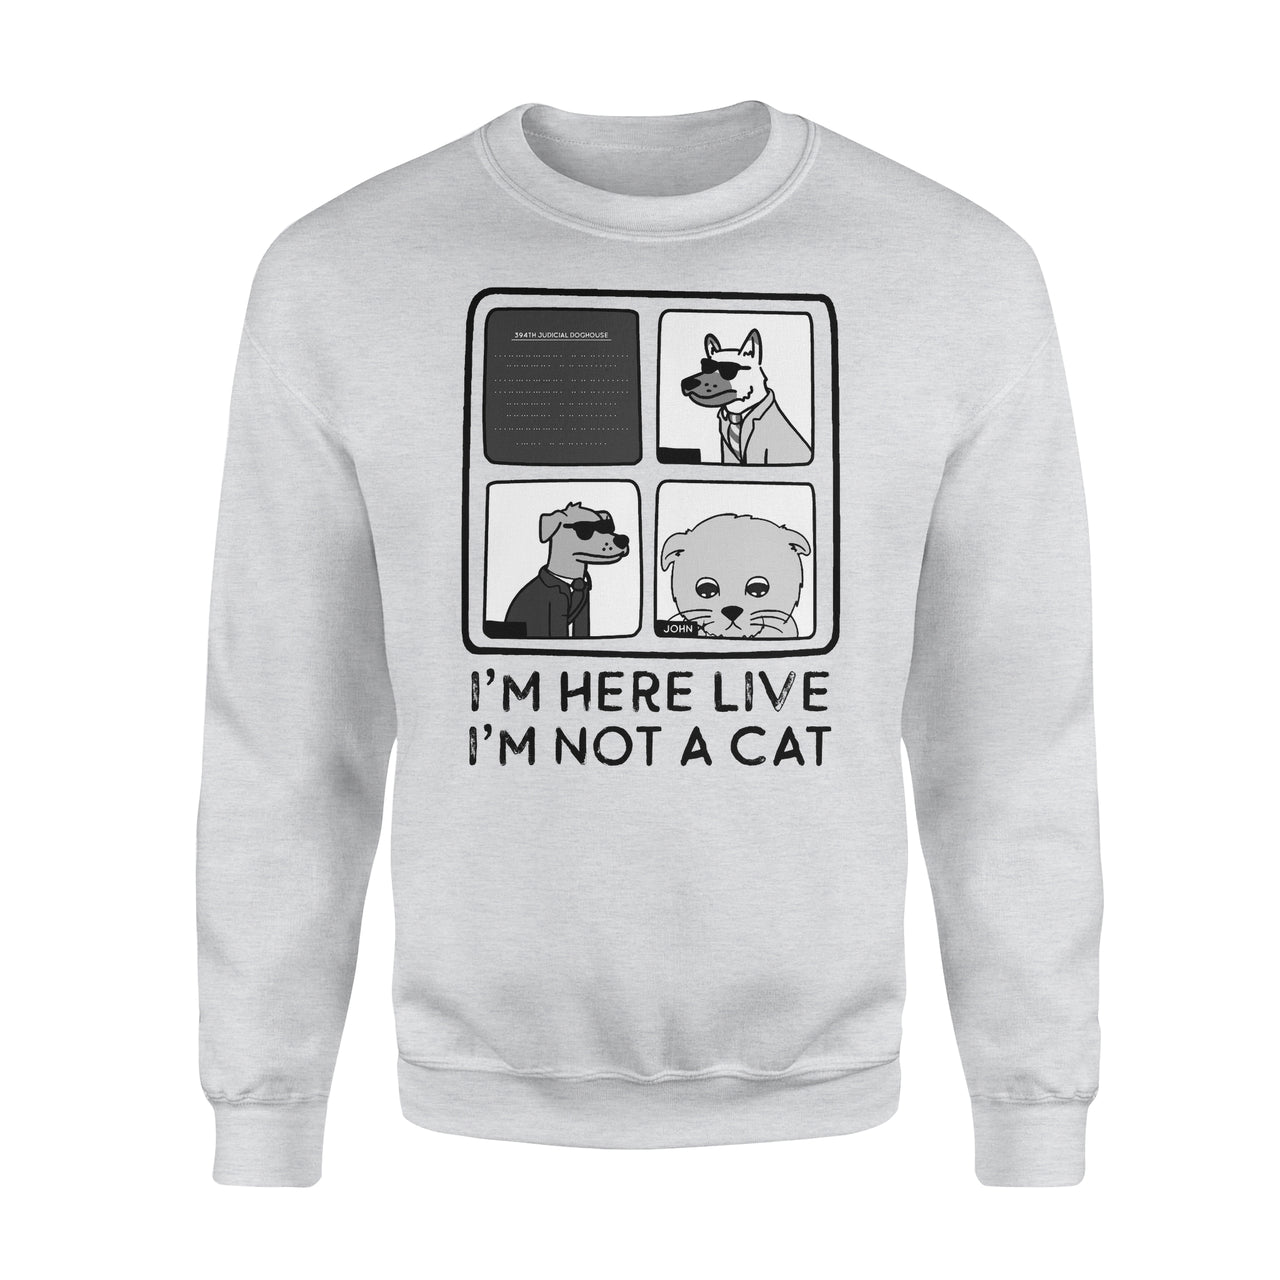 Personalized Pet Gift Idea - I'm Here Live, I'm Not A Cat - Standard Crew Neck Sweatshirt